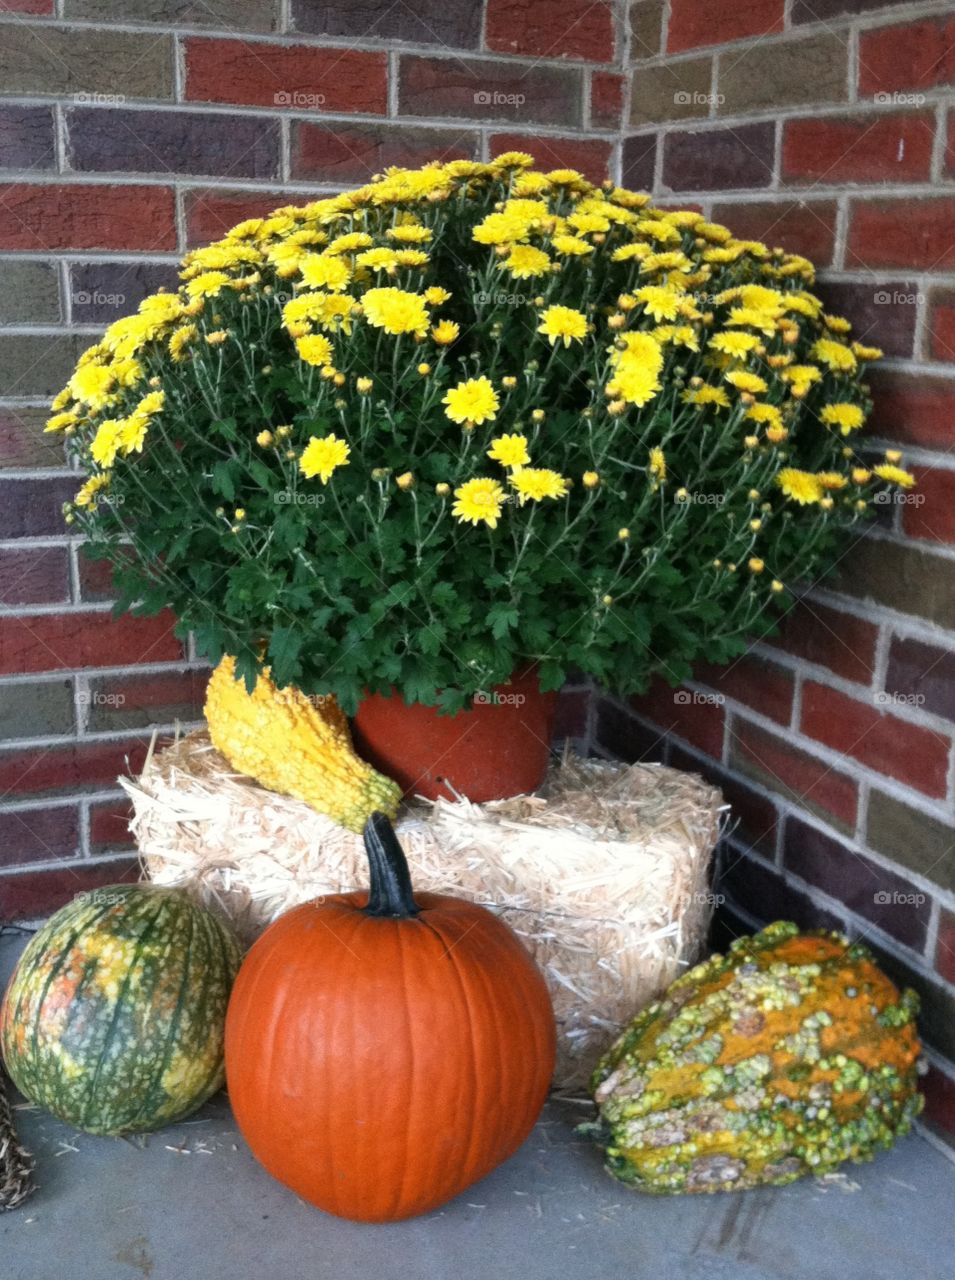 Fall porch display